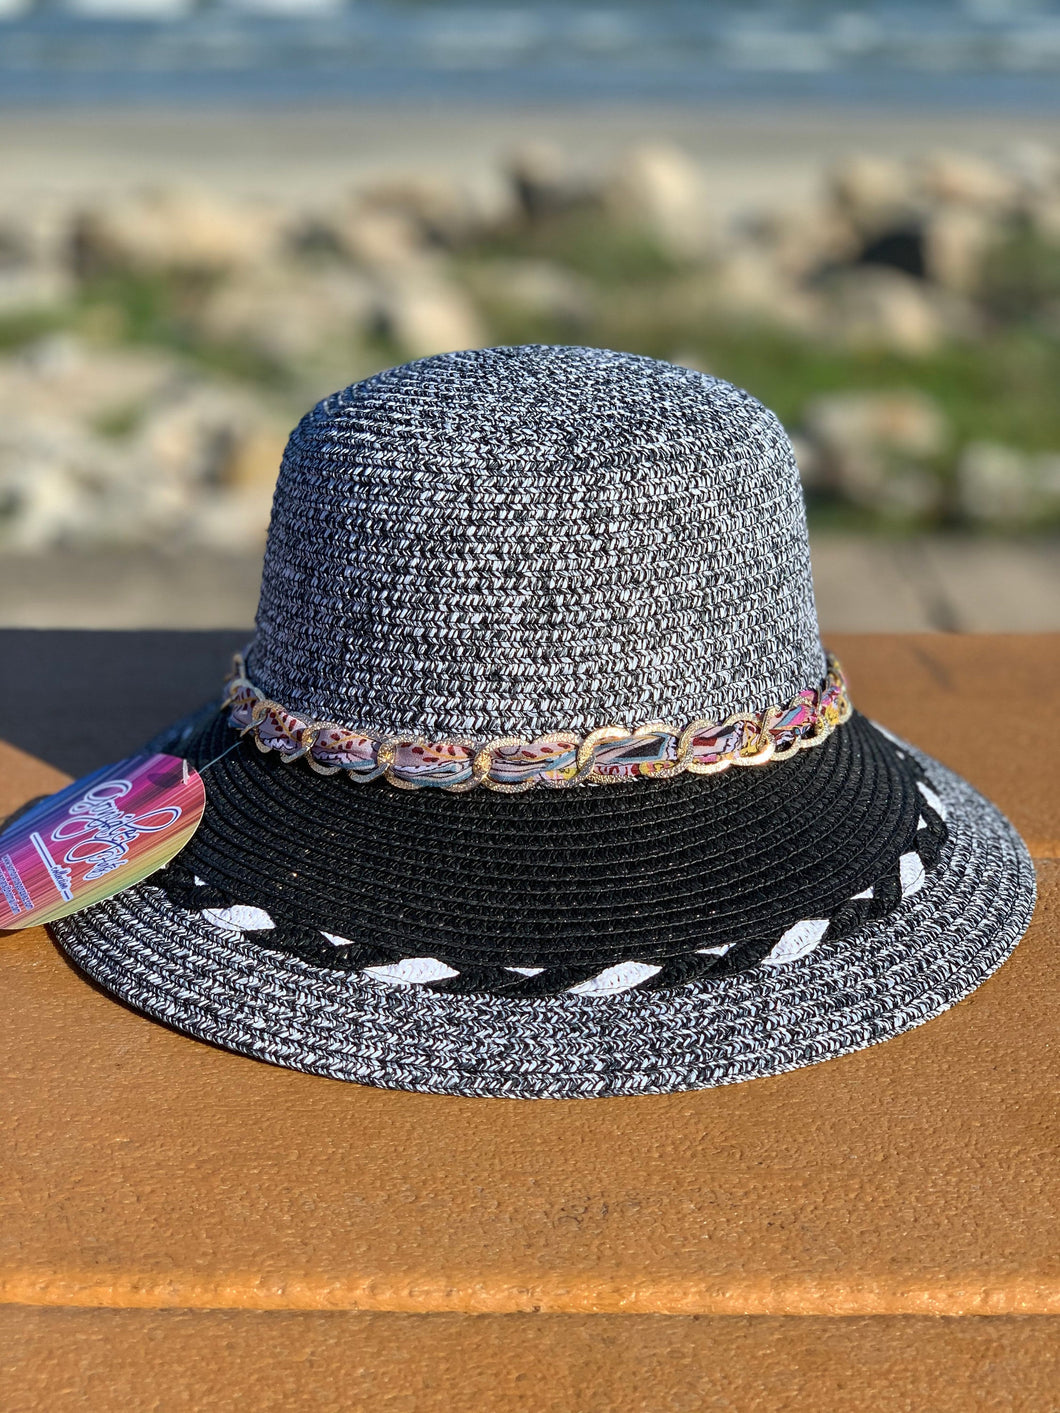 Lady Visor Hat Woman Visor Hat Woman Straw Hat Woman Indiana Hat for Beach Hat for Woman Hat